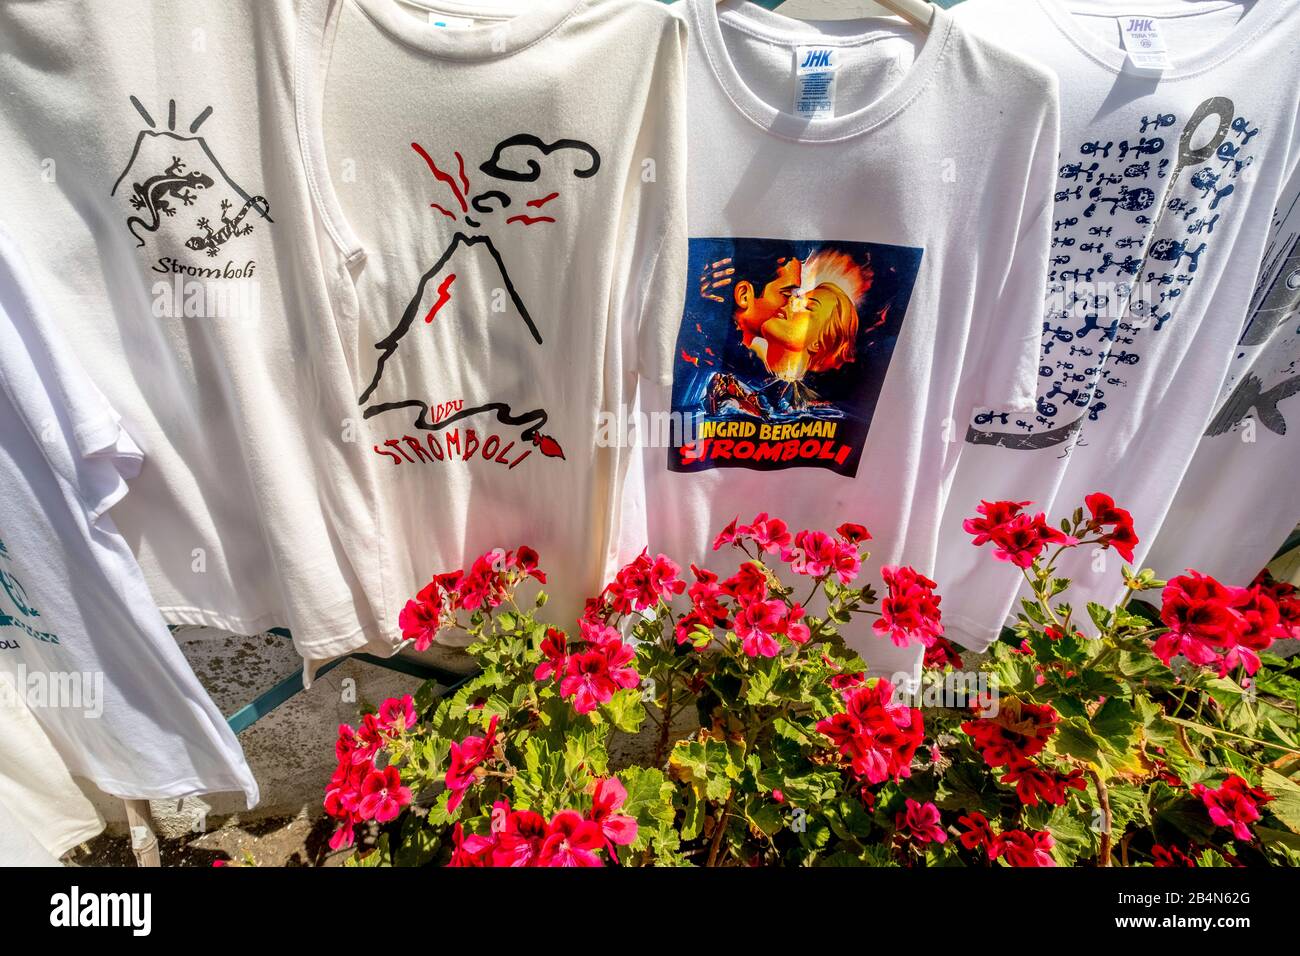 Stromboli T-Shirts with Ingrid Bergman logo, Stromboli, Aeolian Islands, Aeolian Islands, Tyrrhenian Sea, Southern Italy, Europe, Sicily, Italy Stock Photo